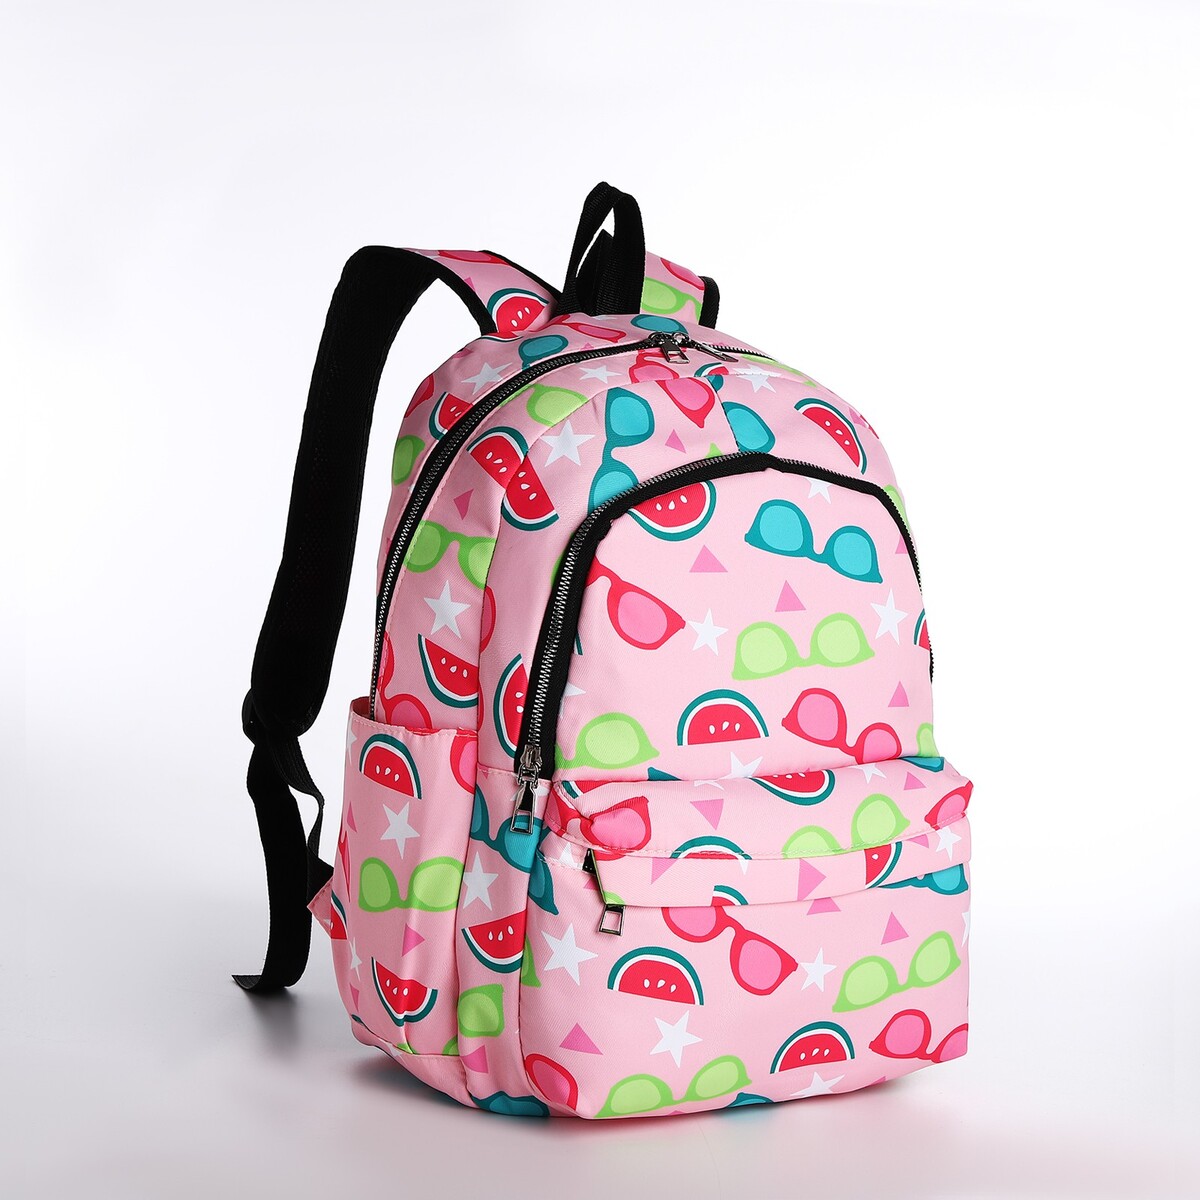 Рюкзак молодежный из текстиля 2 отдела на молнии, 3 кармана, цвет розовый рюкзак школьный из текстиля на молнии 2 отдела 3 кармана розовый